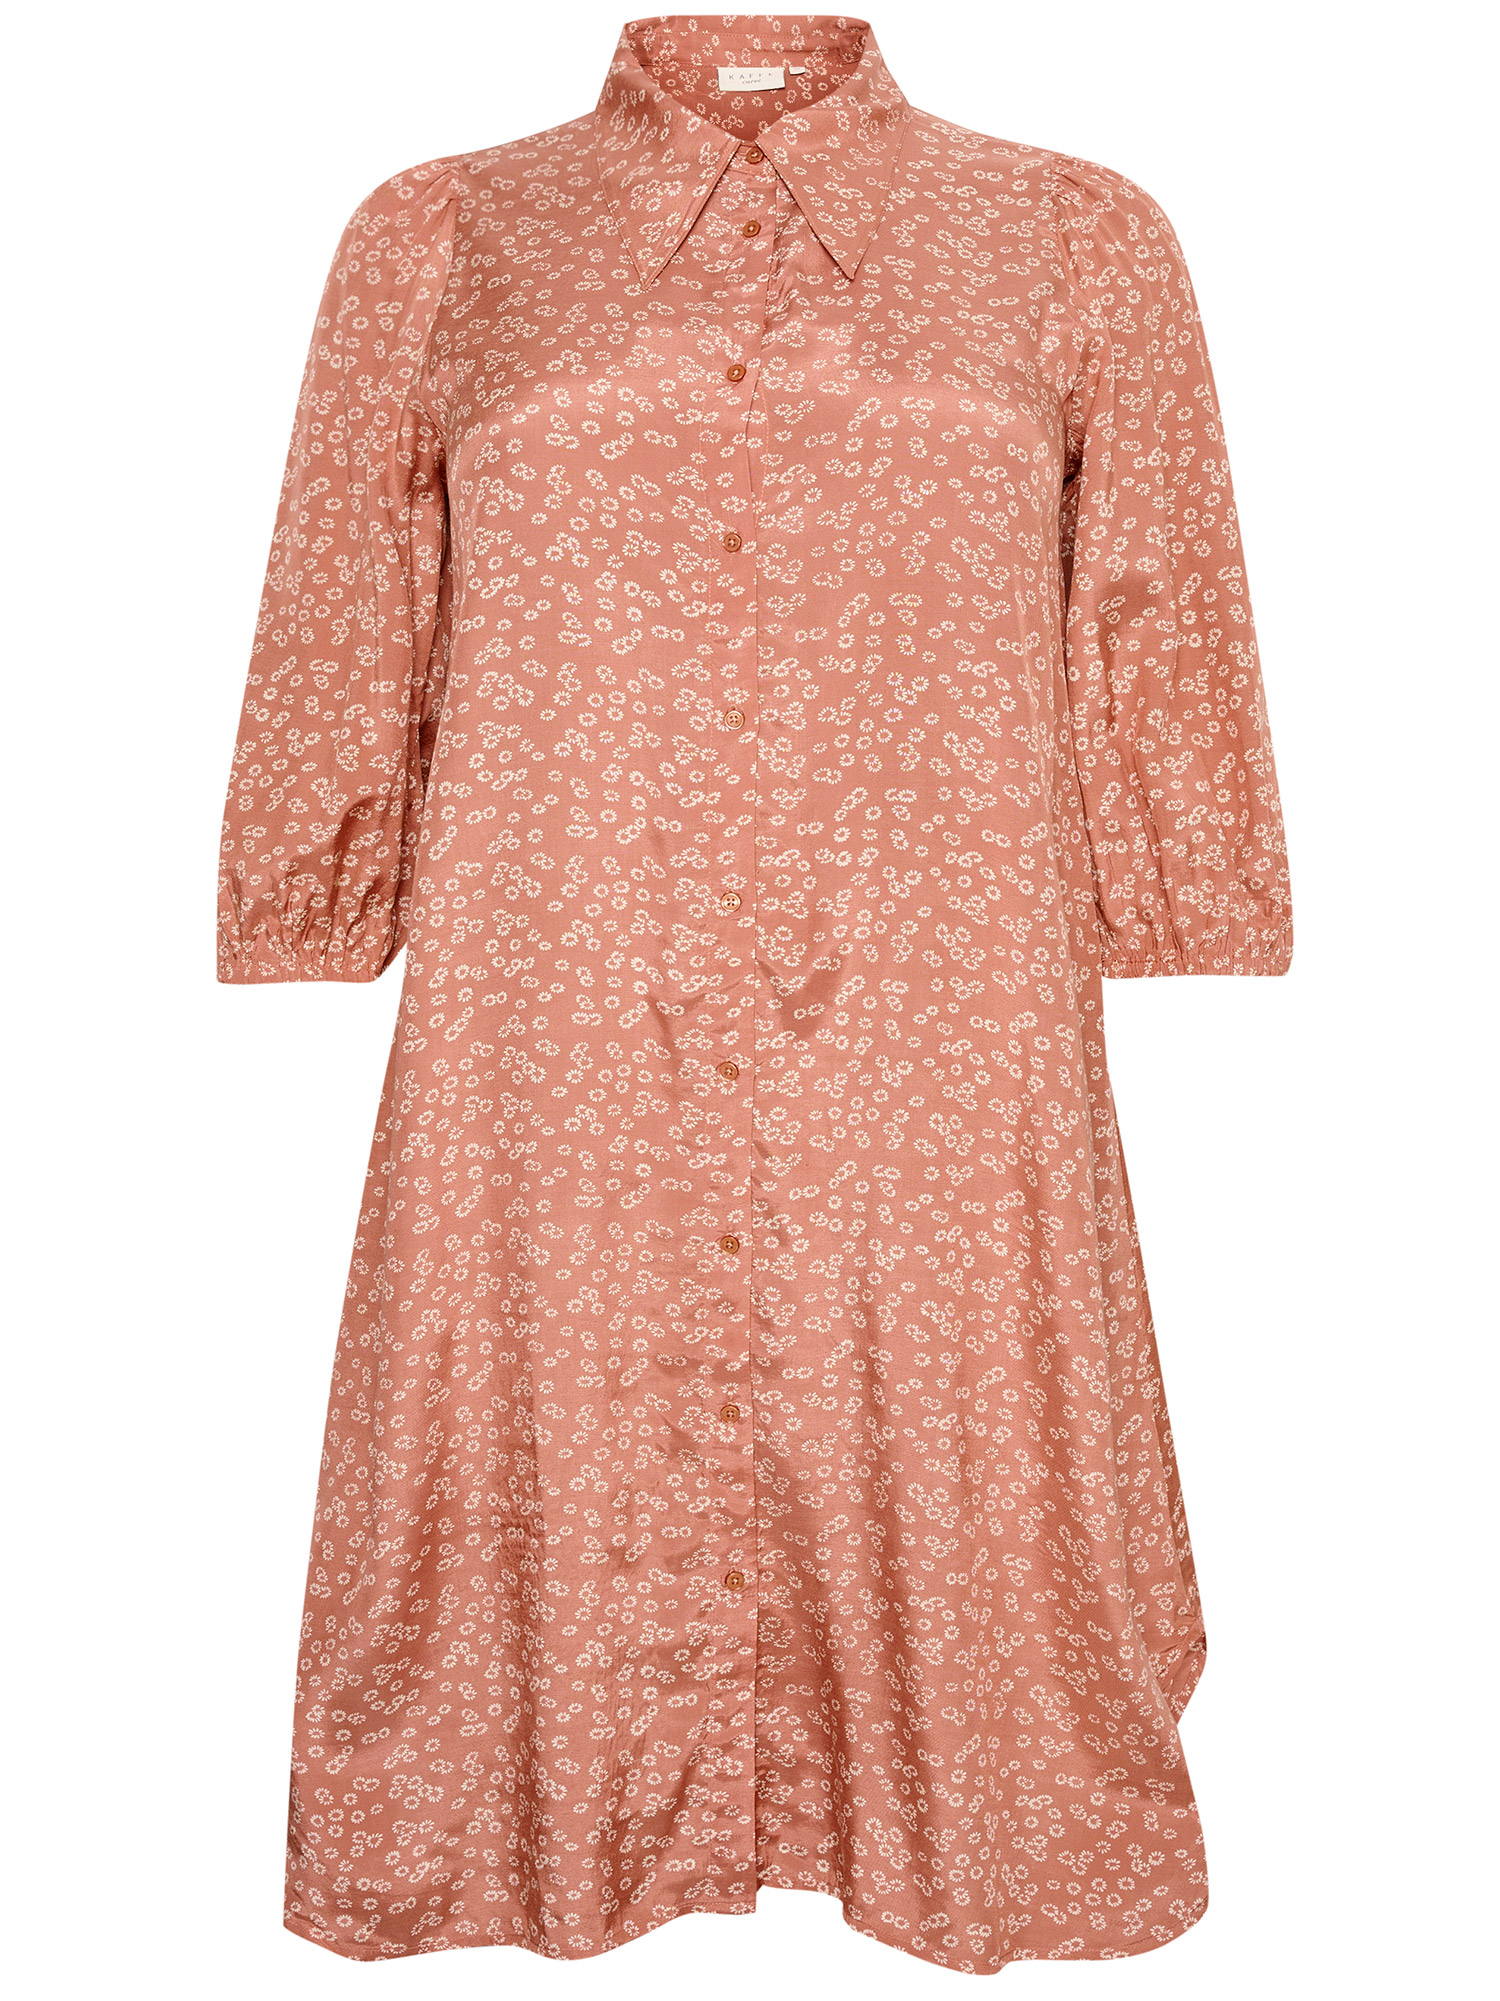 KCsalina - Flot rosa viskose skjorte kjole med lyse blomster fra Kaffe Curve